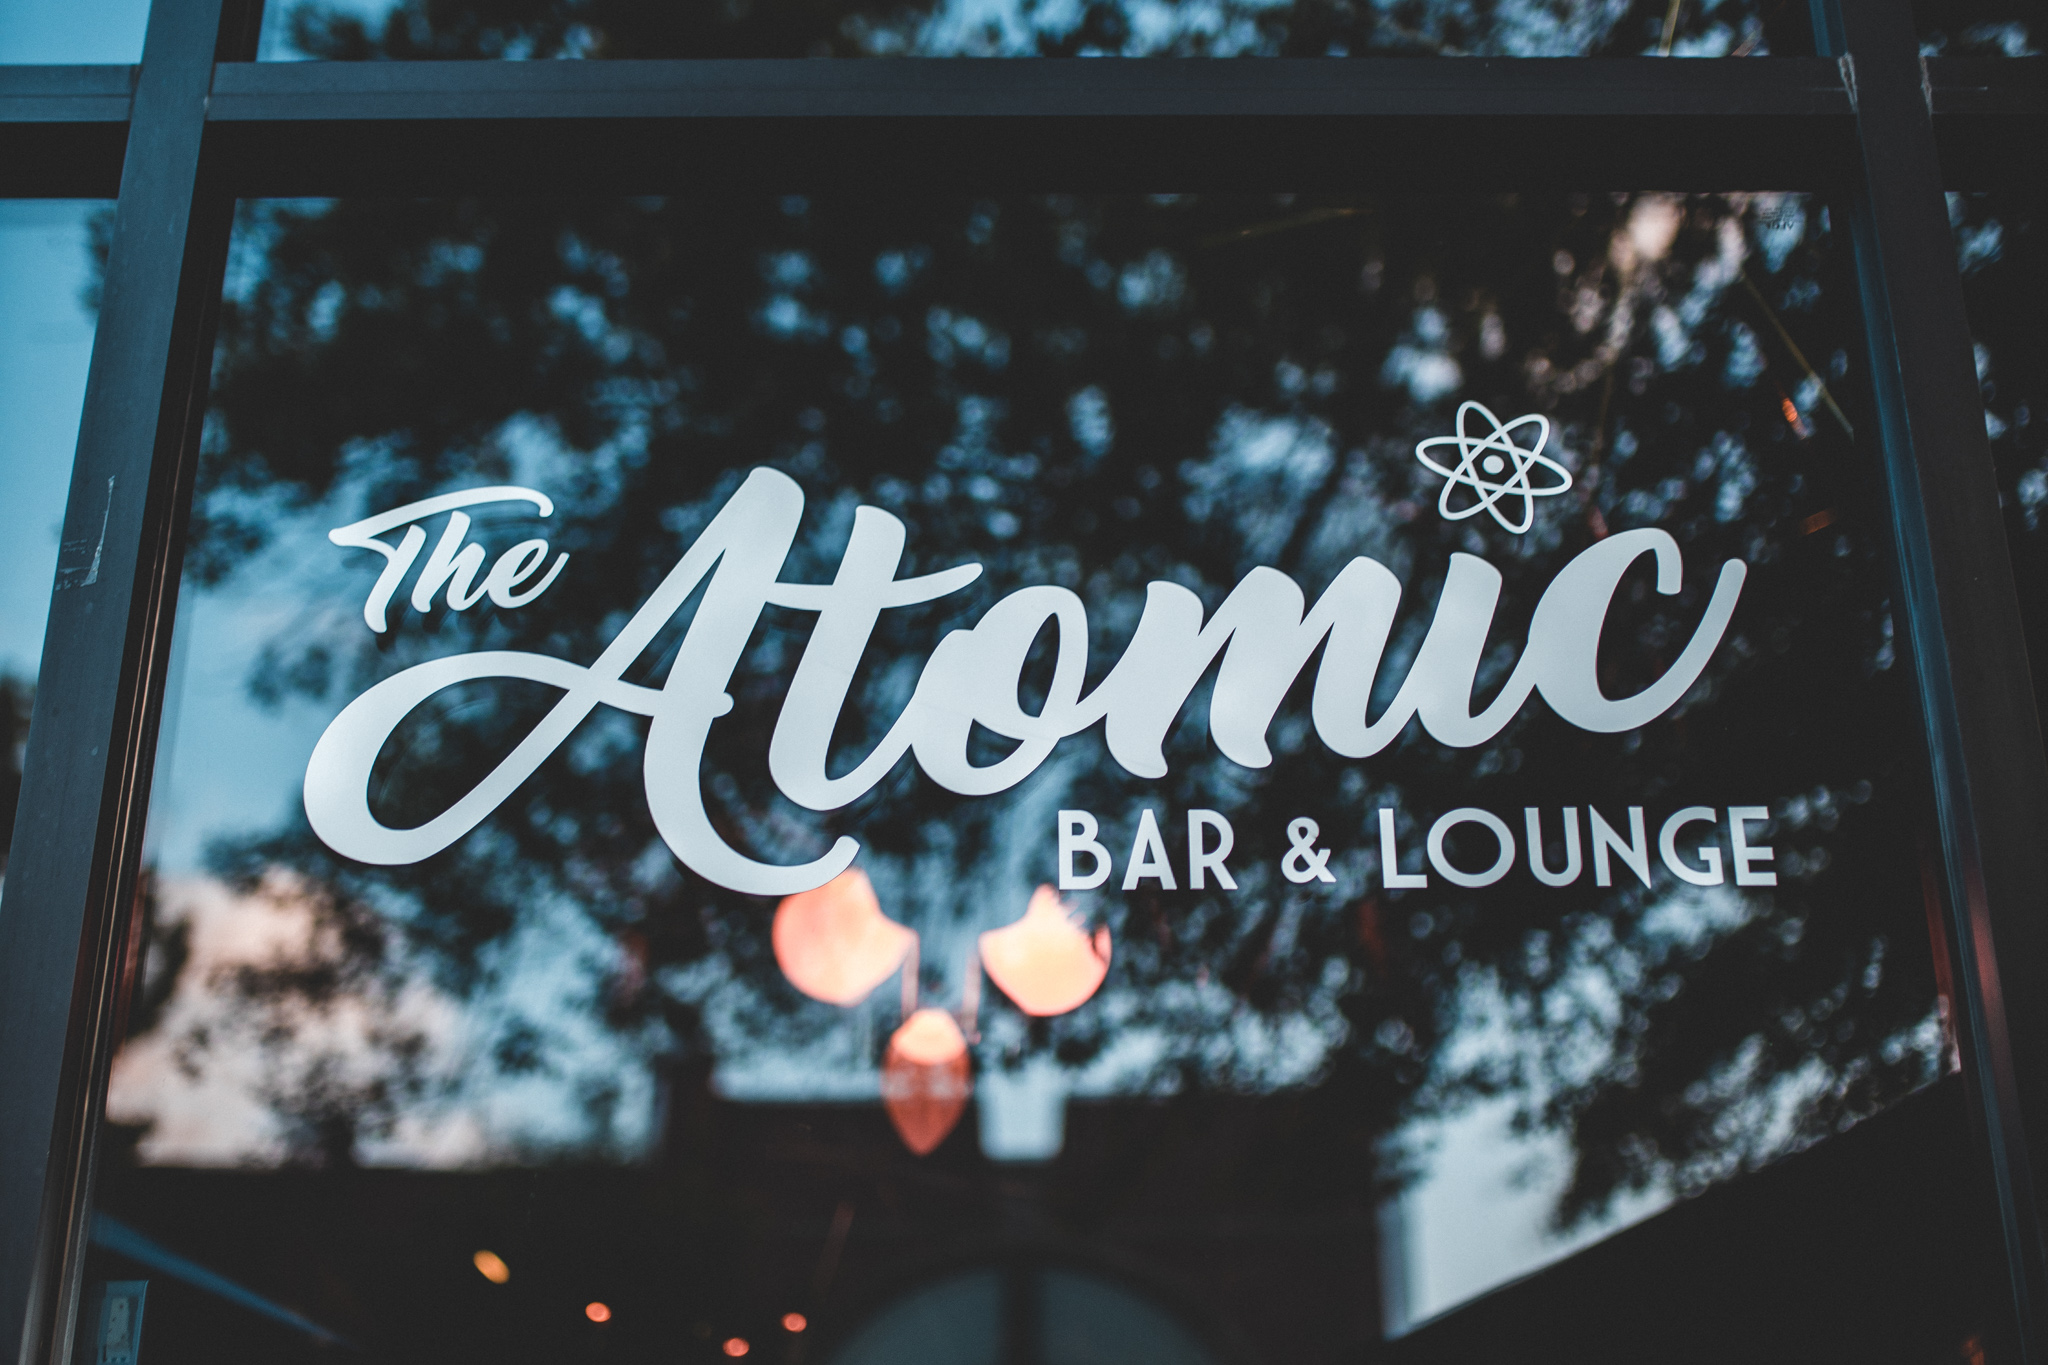 The Atomic